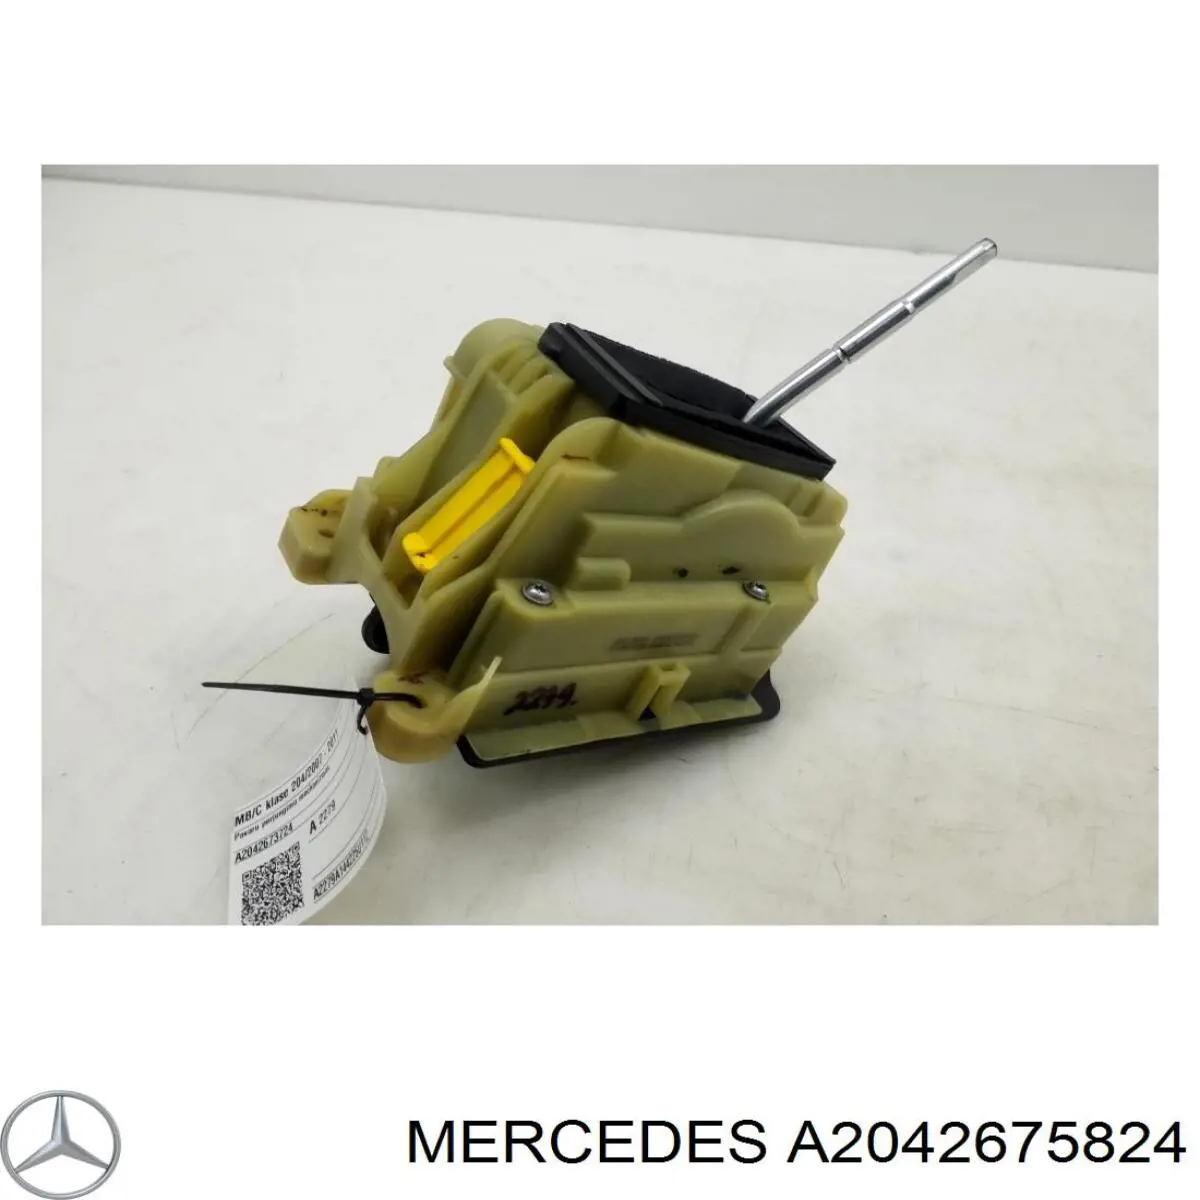 A2042675824 Mercedes palanca de selectora de cambios